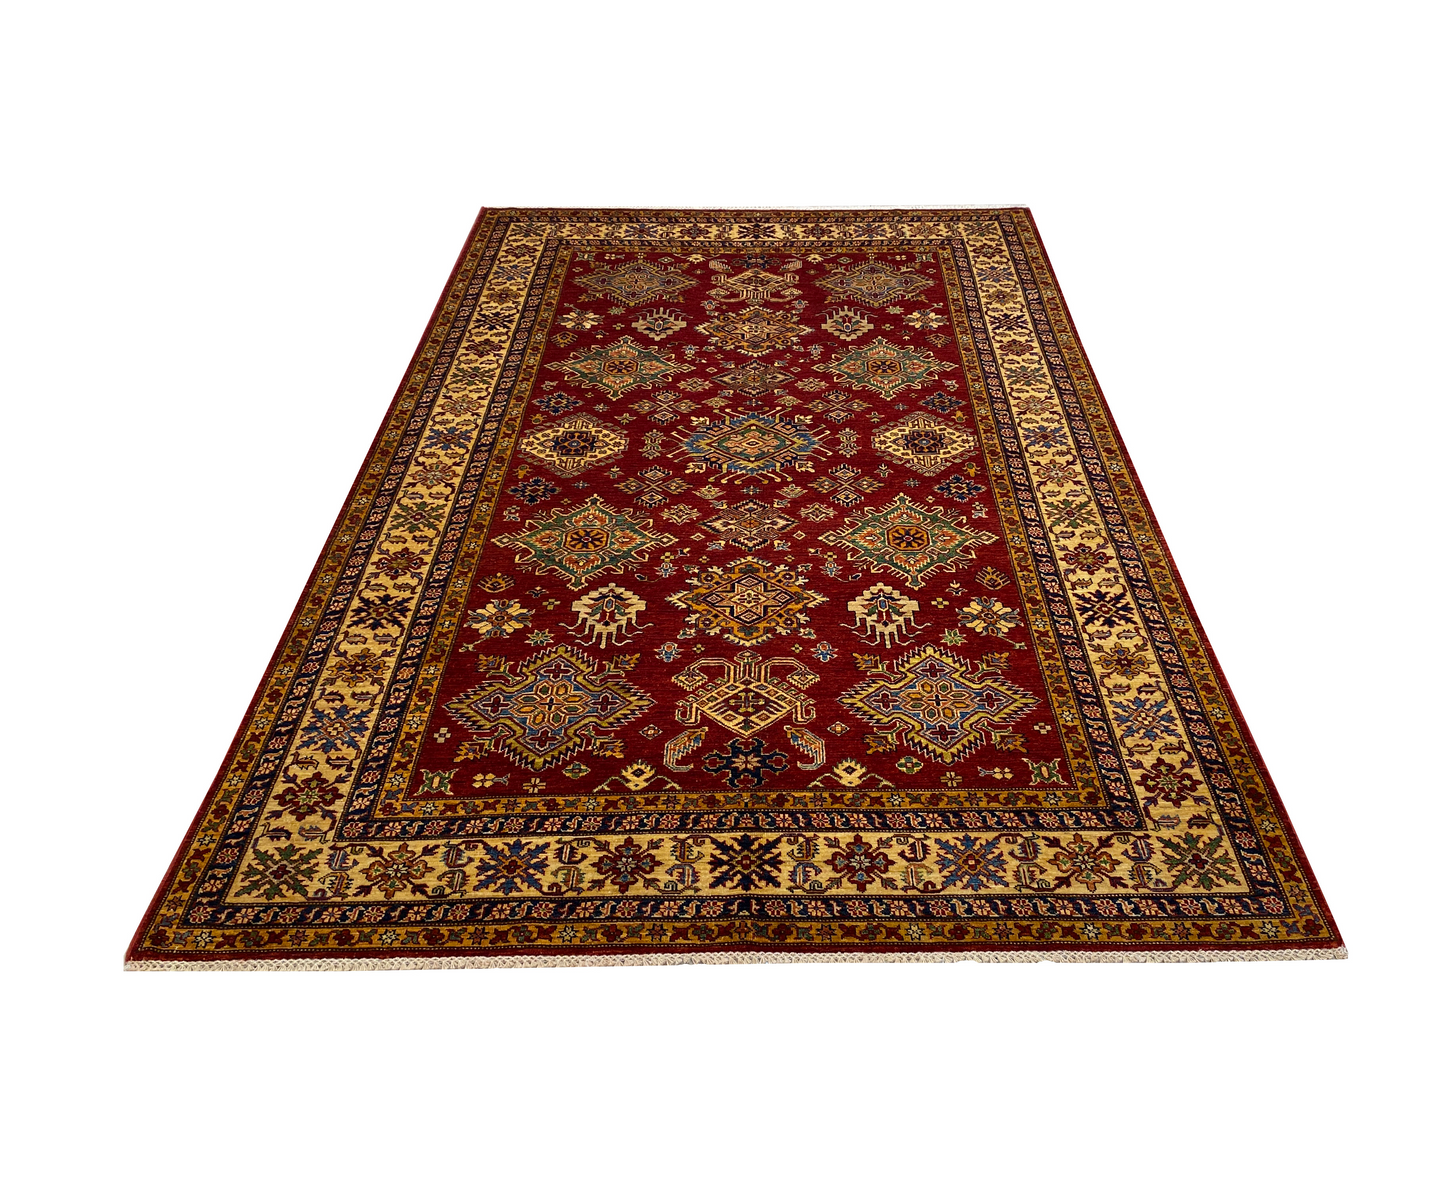 Şirvan Bicolor Carpet 307 X 197 cm